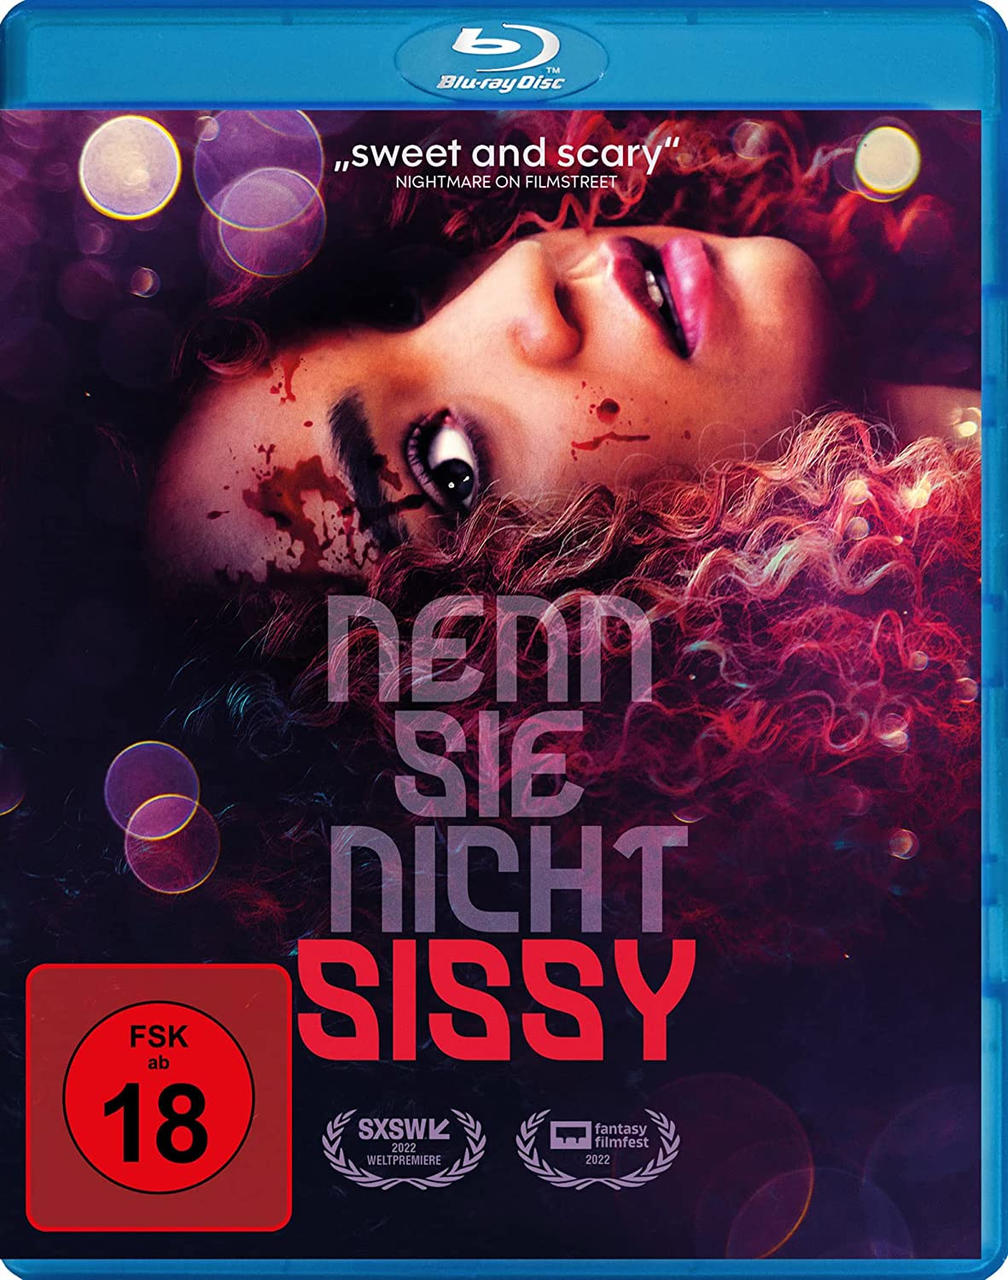 Blu-ray Sissy